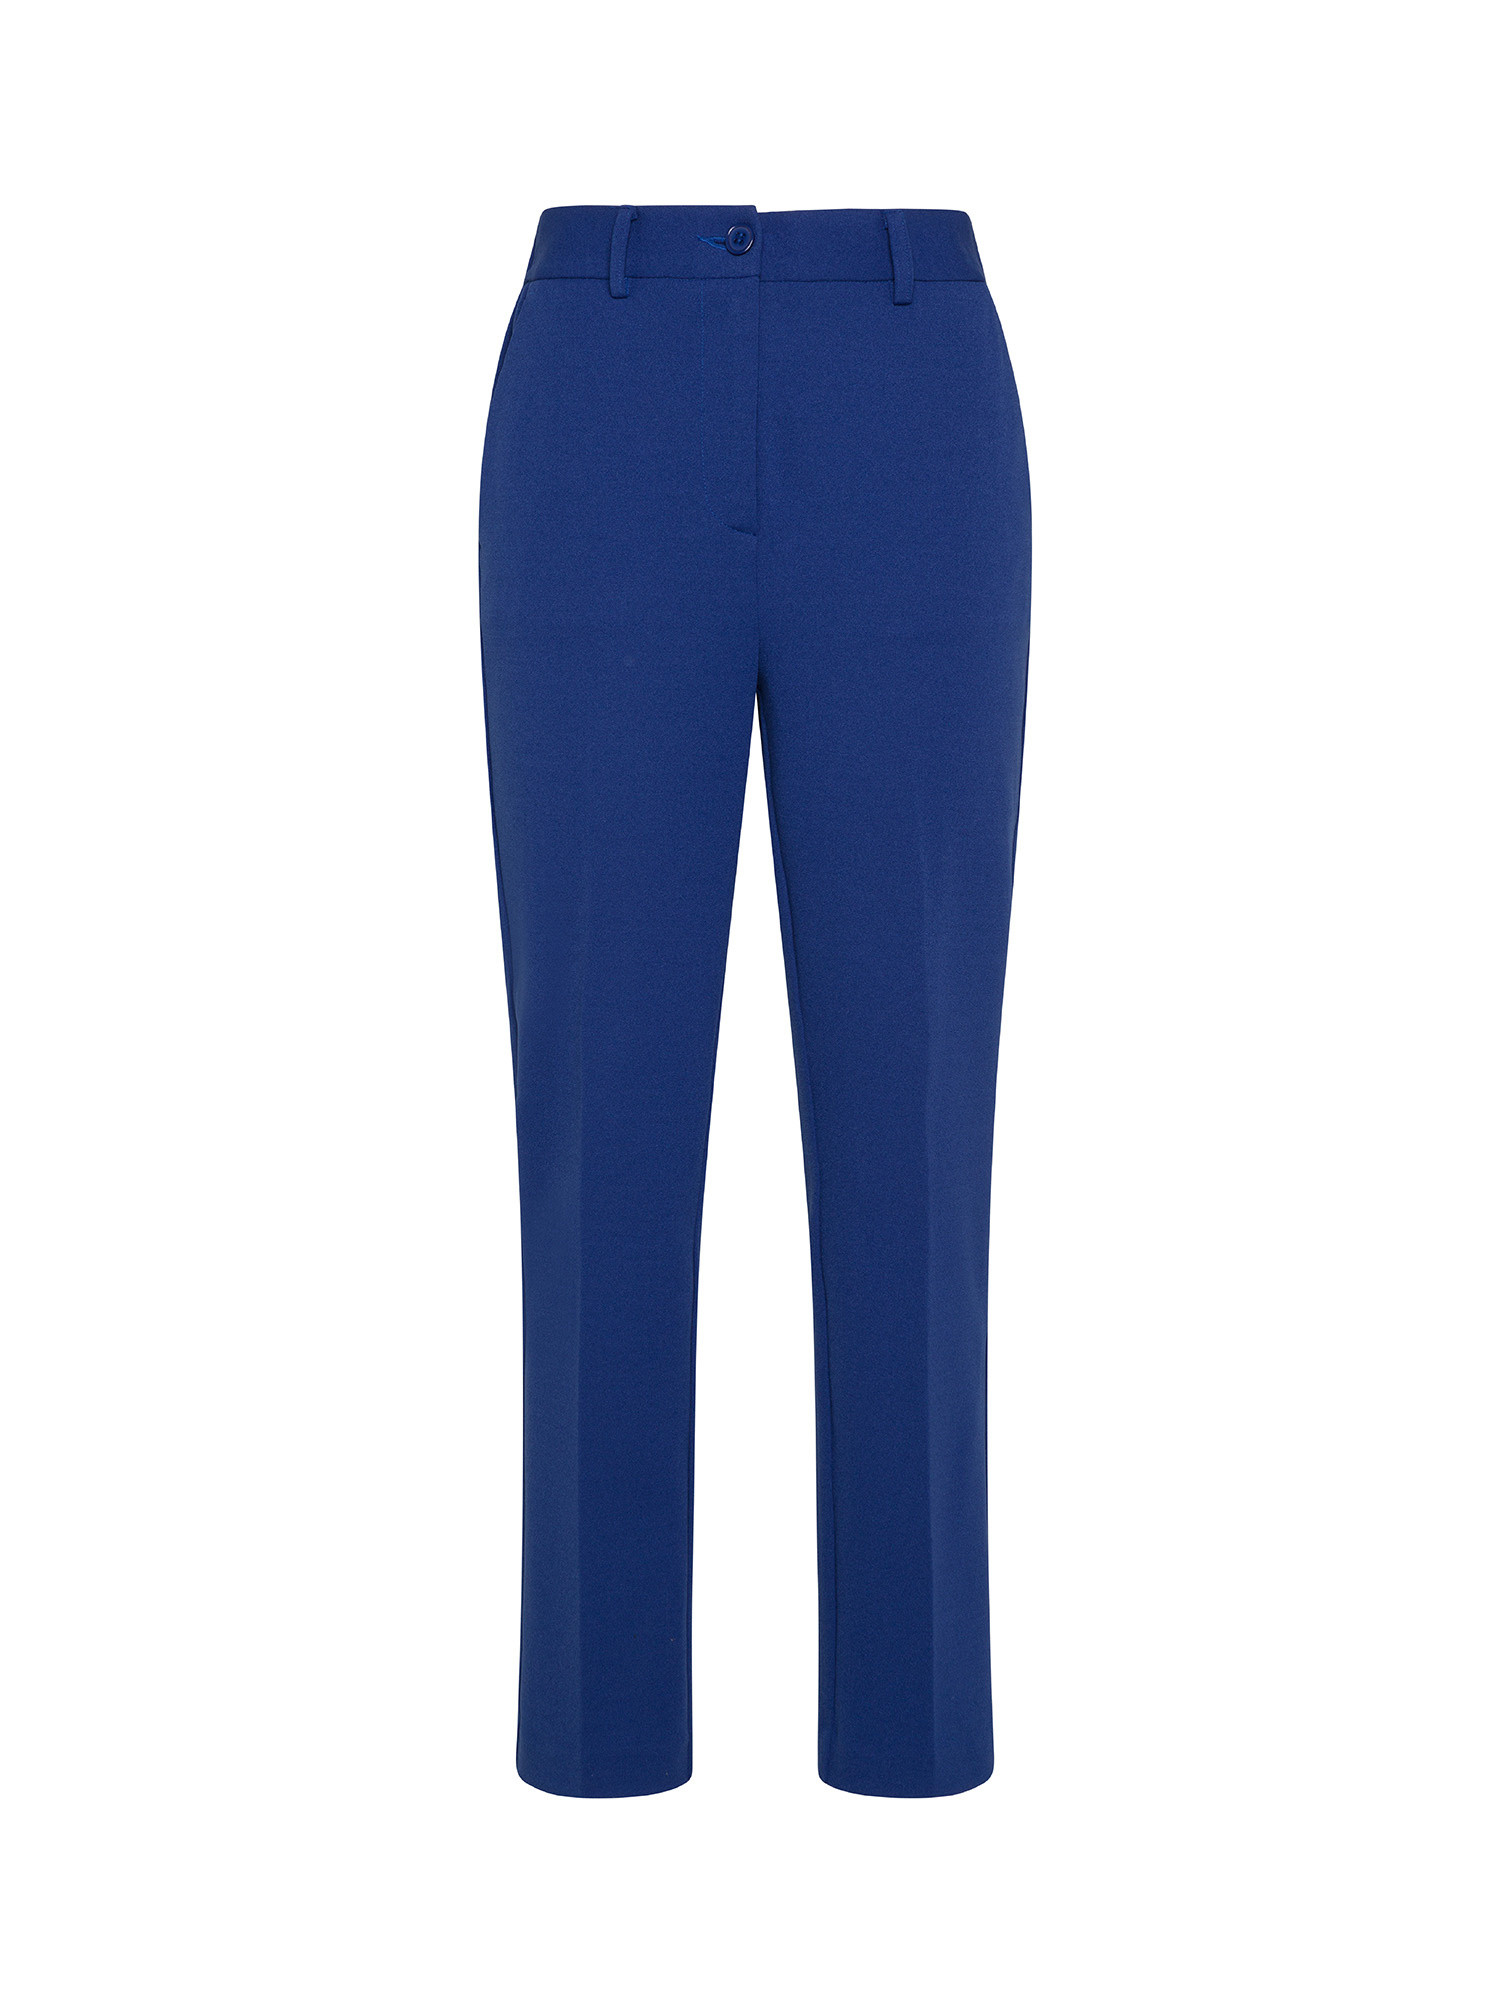 Koan - Crepe pants, Royal Blue, large image number 0